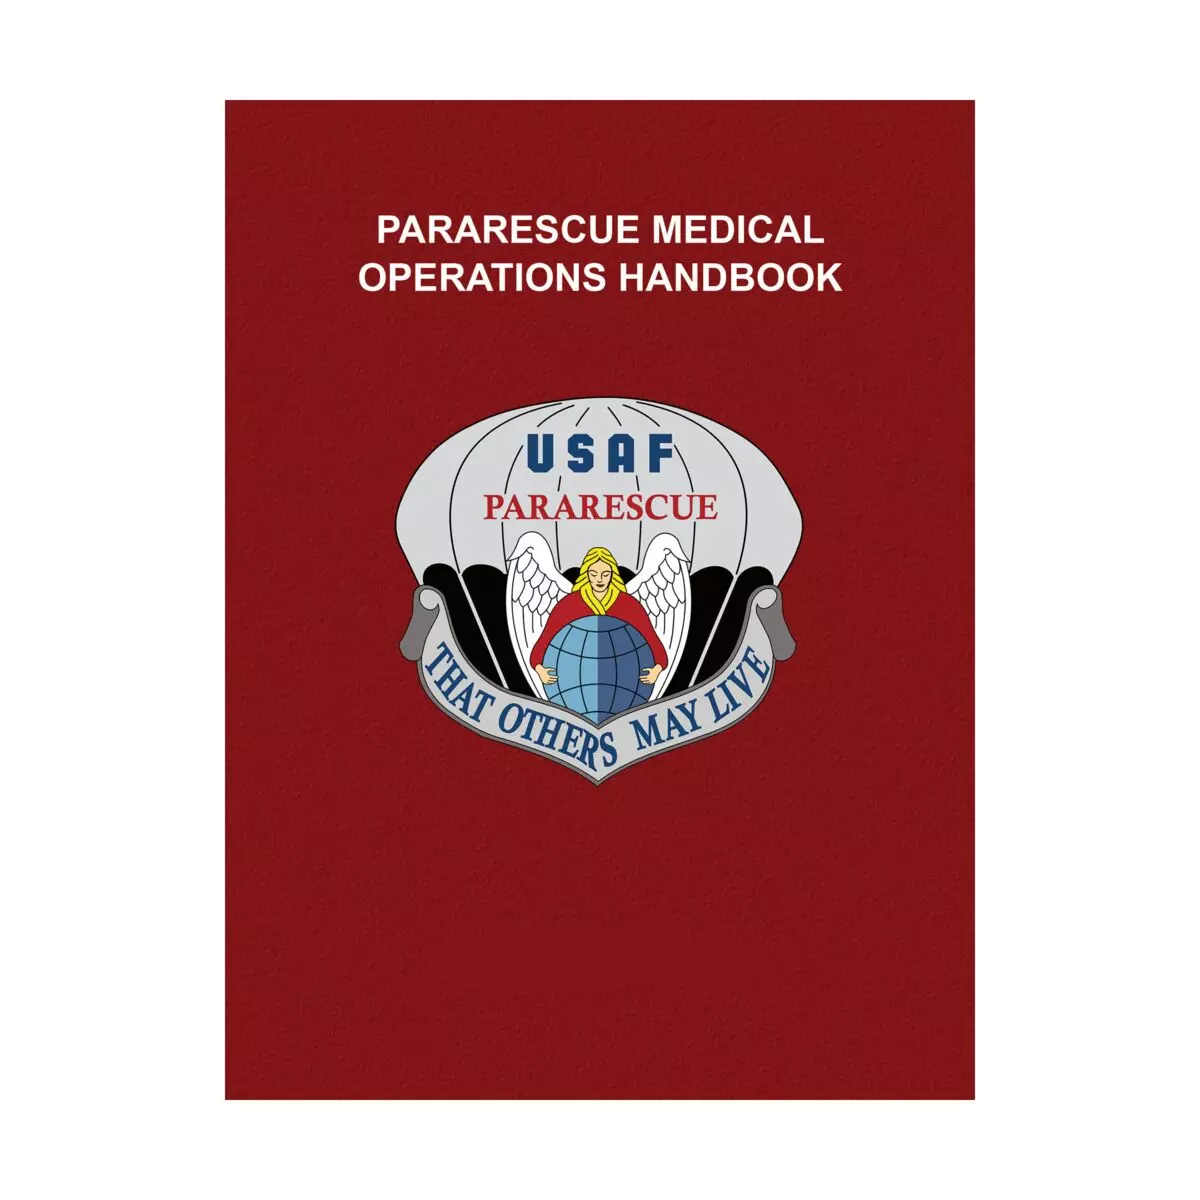 Pararescue Medical Operations (PJ MED) Handbook 8th Edition